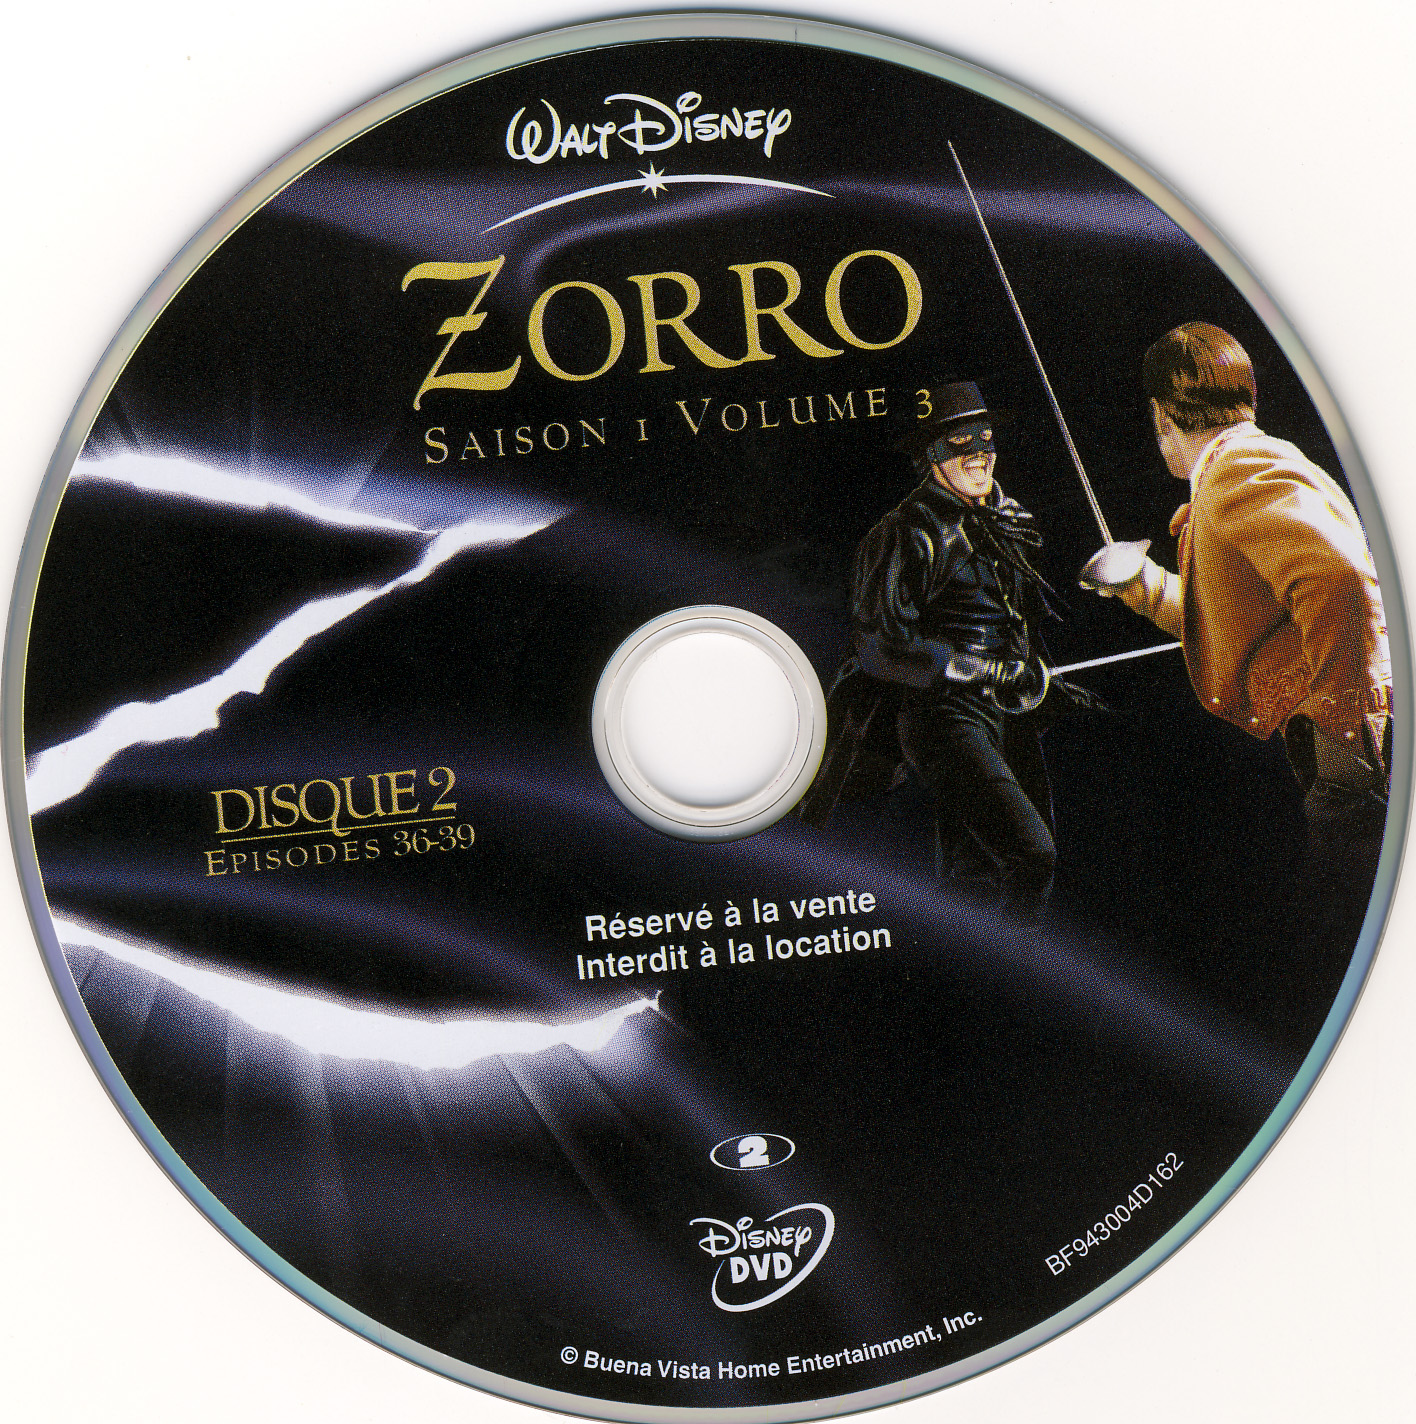 Zorro Saison 1 vol 3 DISC 2